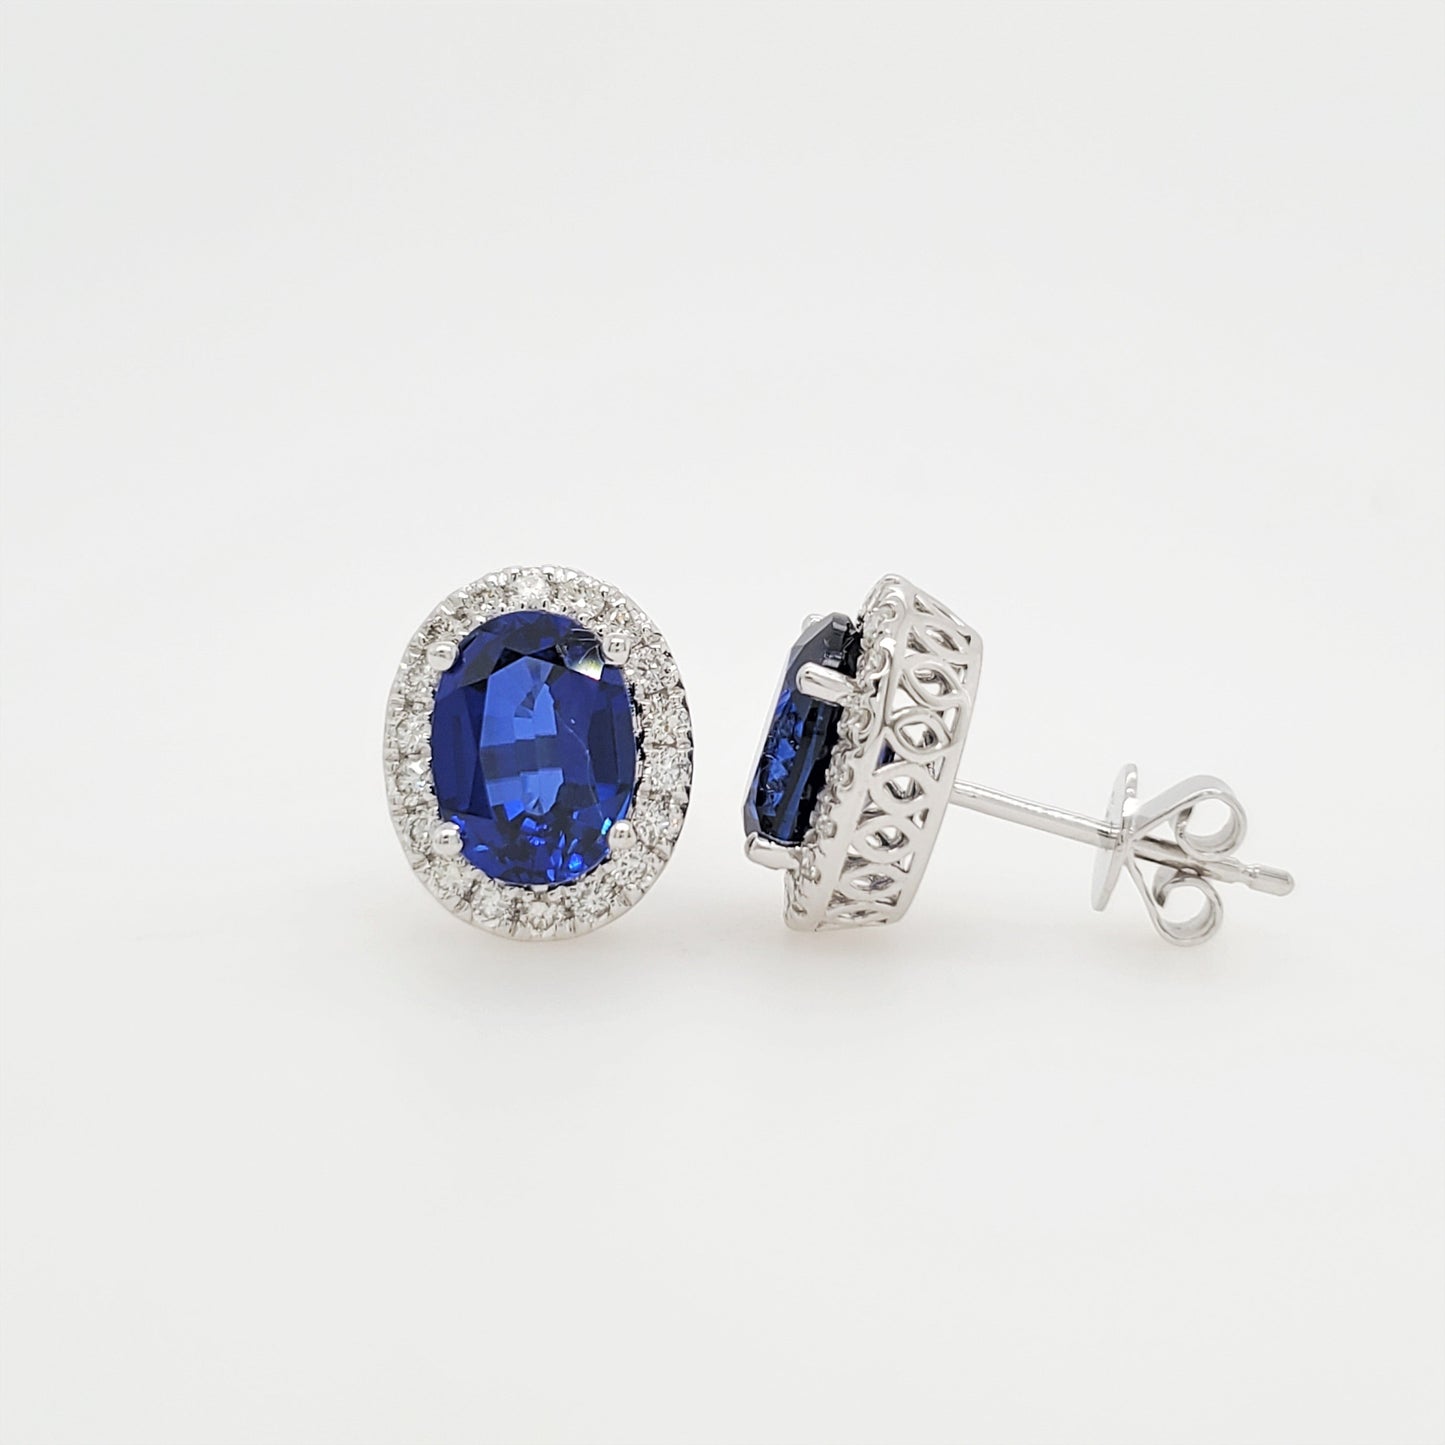 17635E-OV8X6 Earrings With Diamond & Gemstone